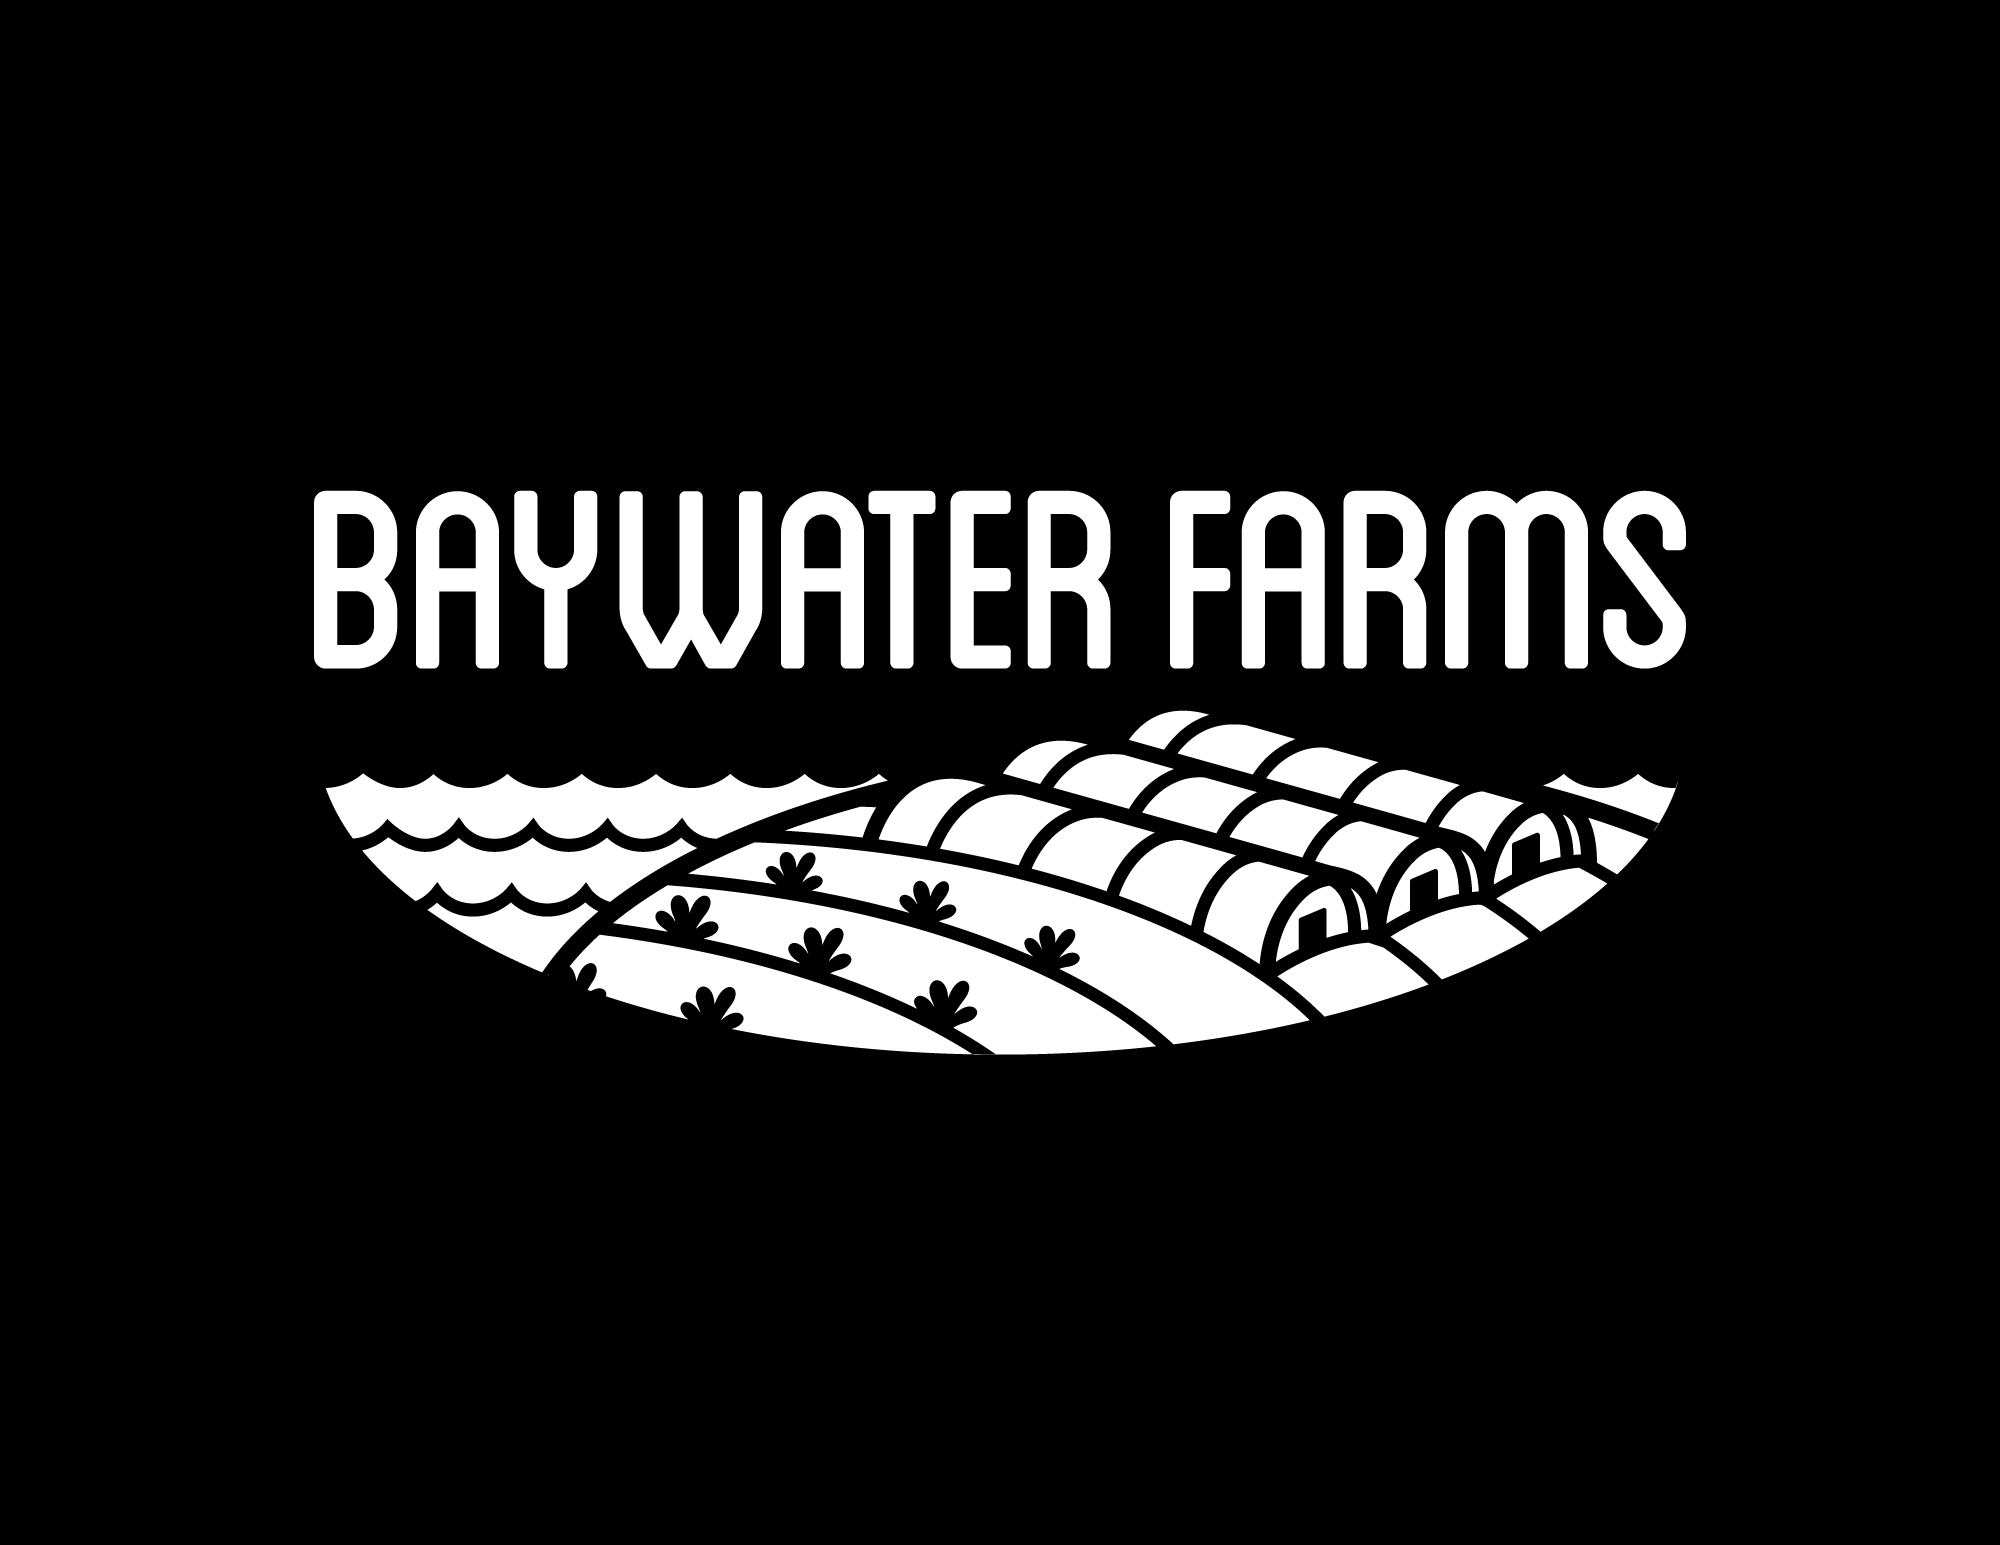 BaywaterFarms_Logo_V1_B&W-Rounded-BlackBKG.png